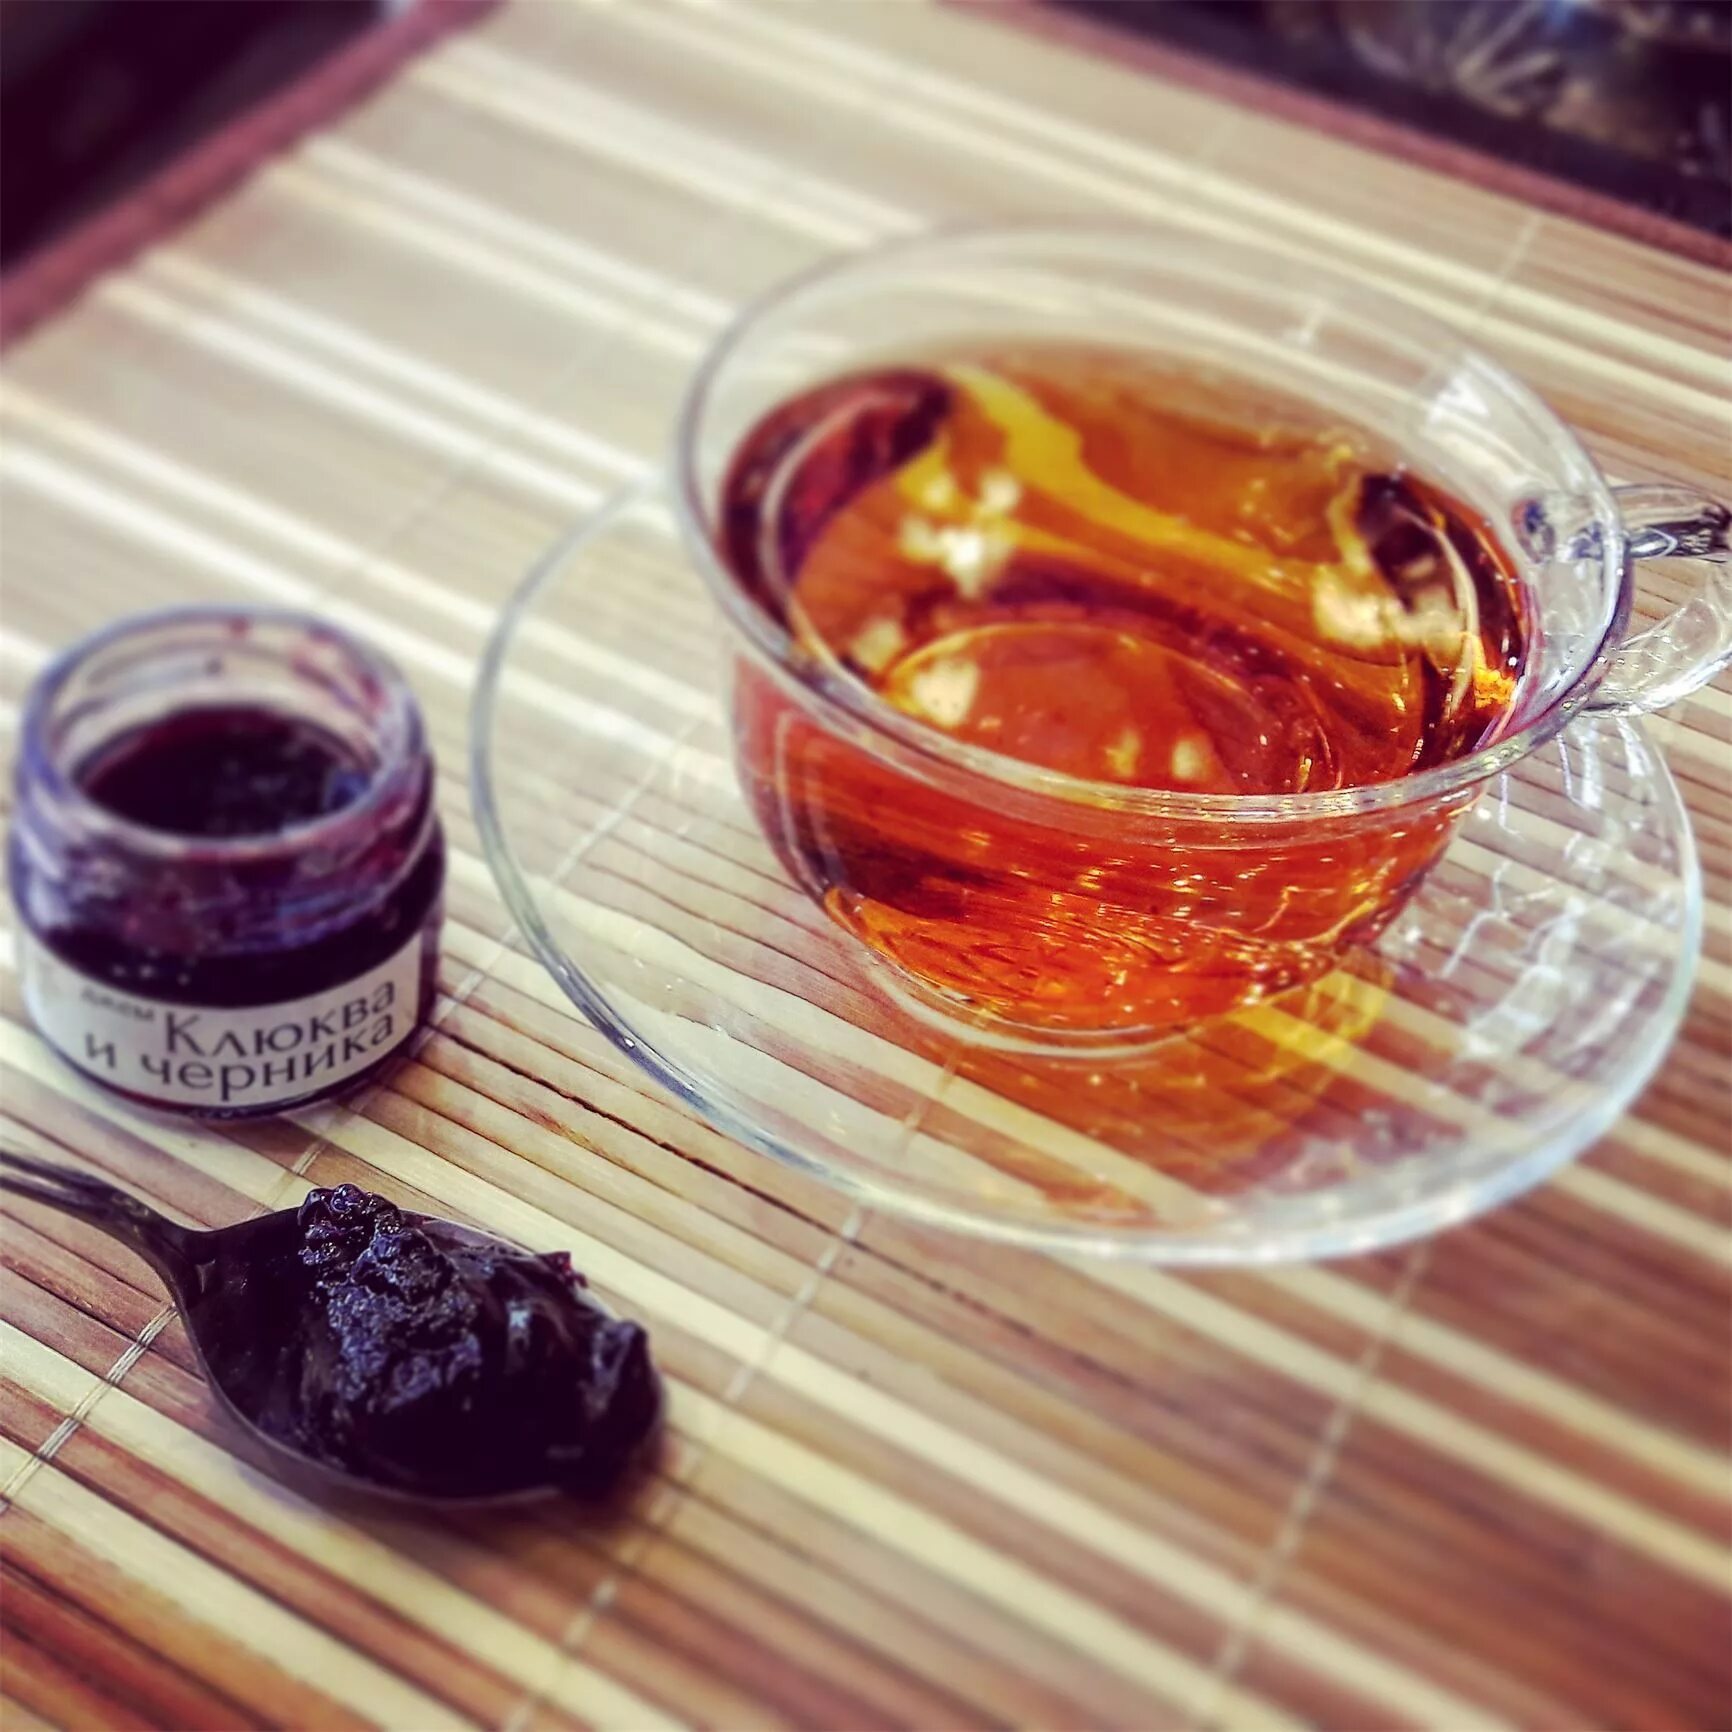 Кружка чай. Чай в кружке. Чашка чая с бергамотом. Чай с бергамотом. Горько сладкий чай